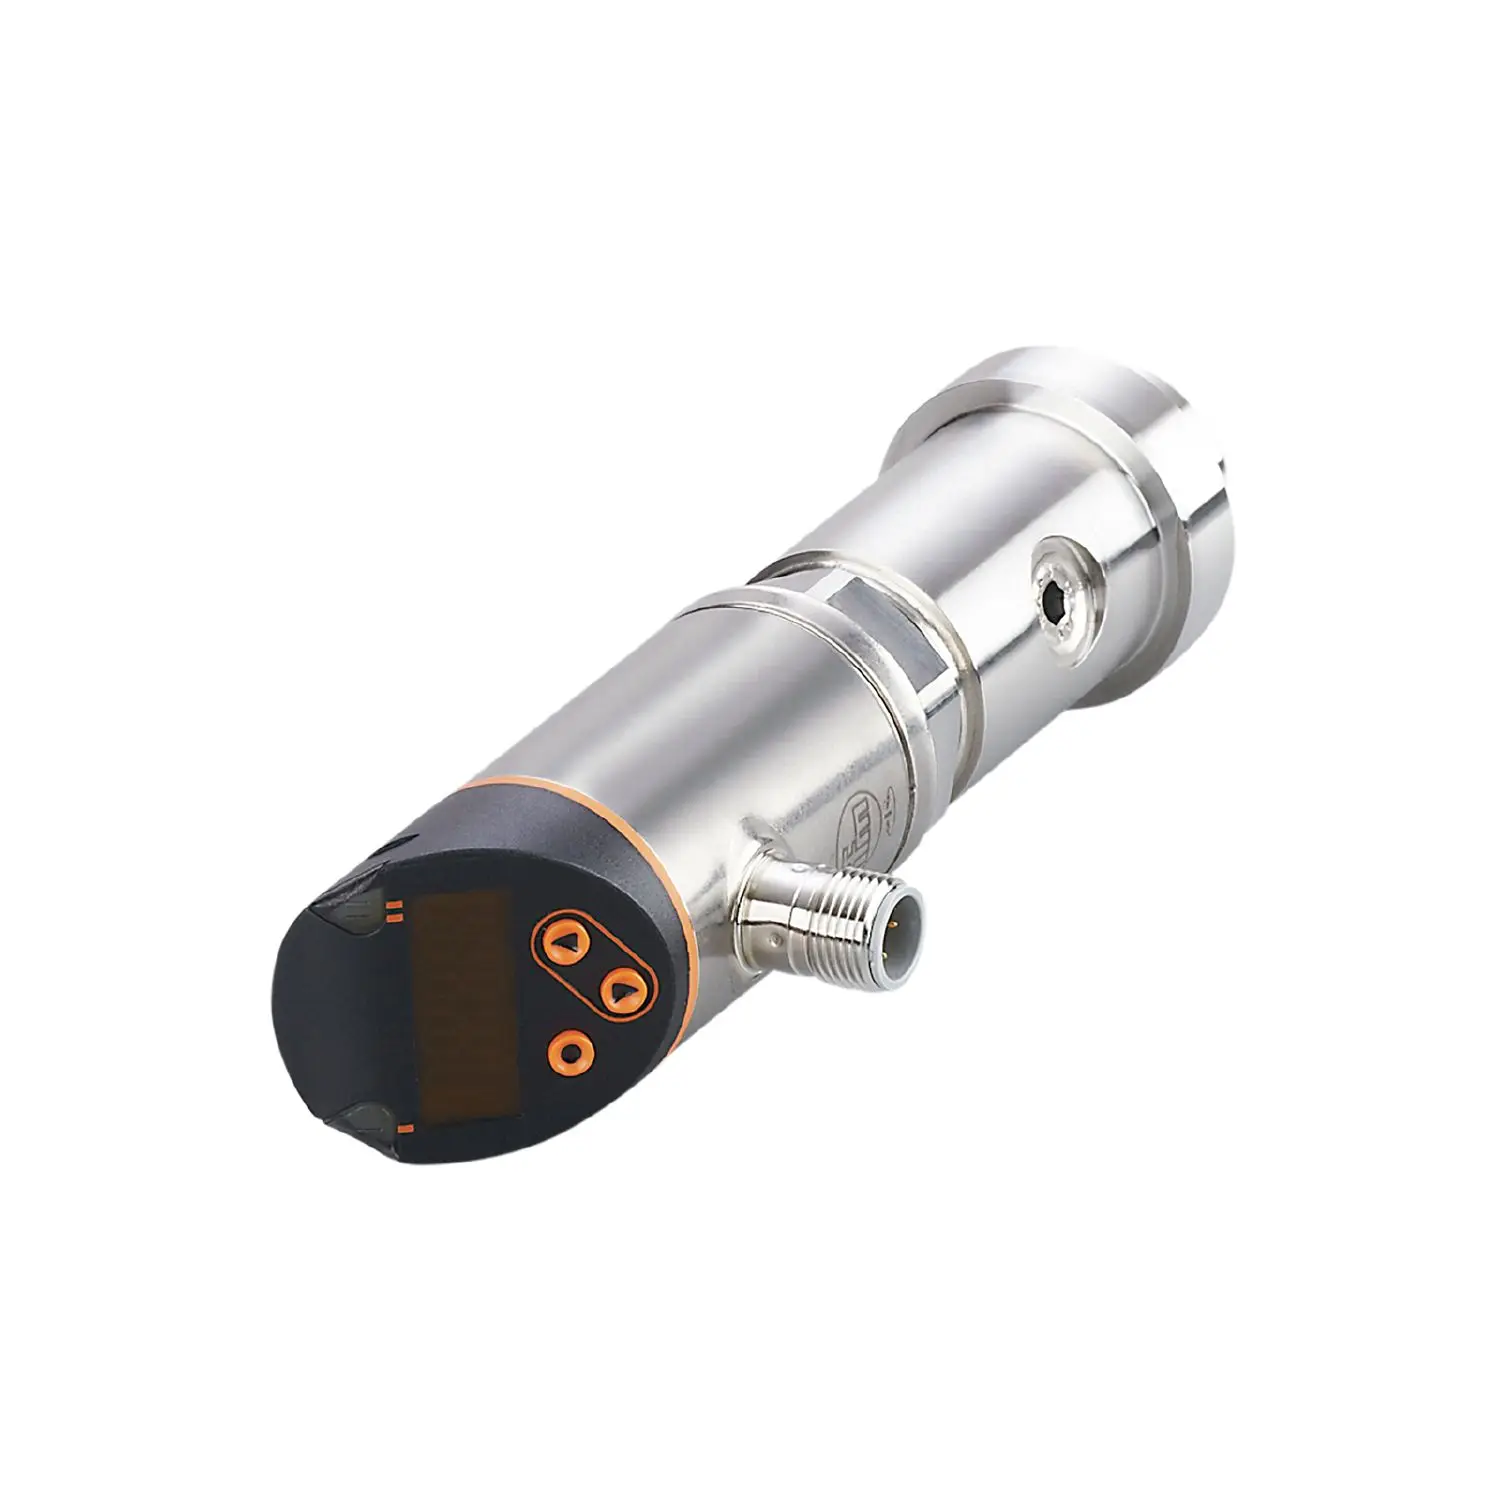 Pressure sensor with display PY9060 PN-600-SE MFRKG/US/ /